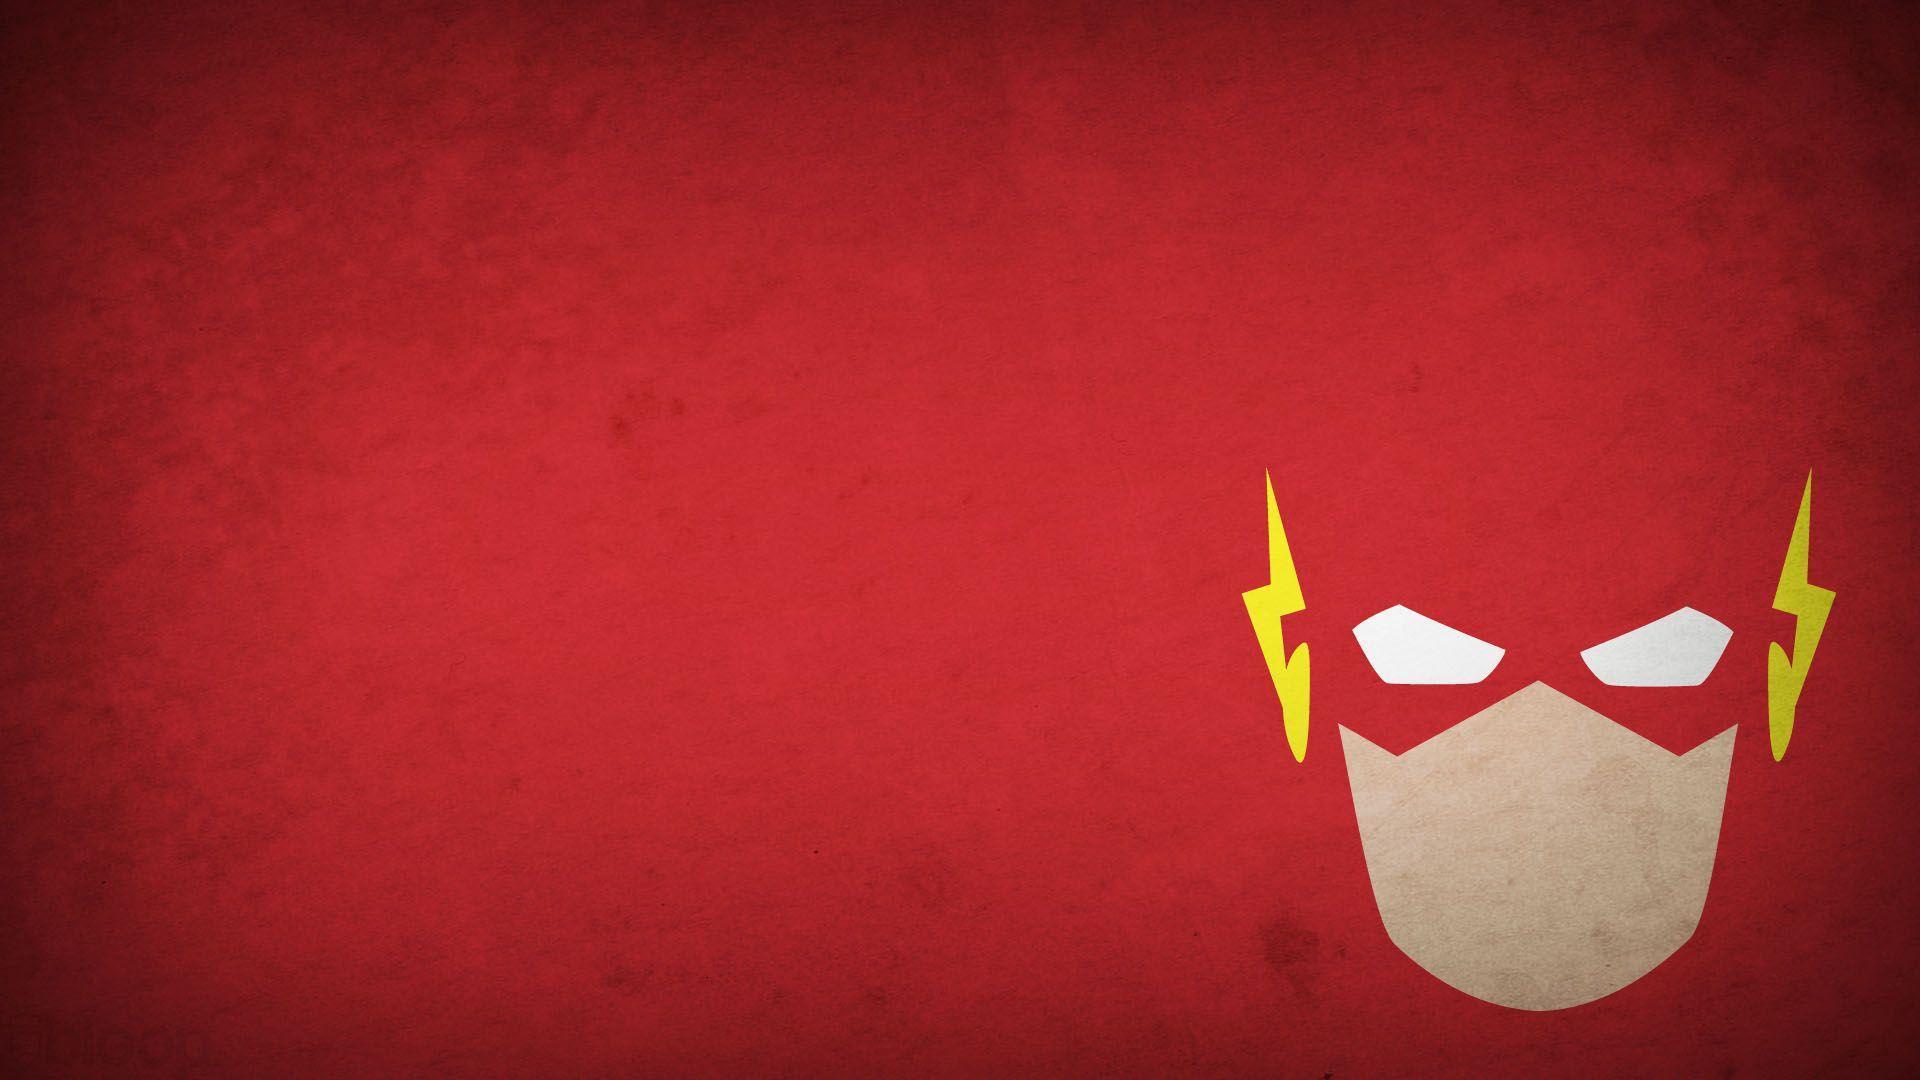 The Flash logo HD wallpaper free download